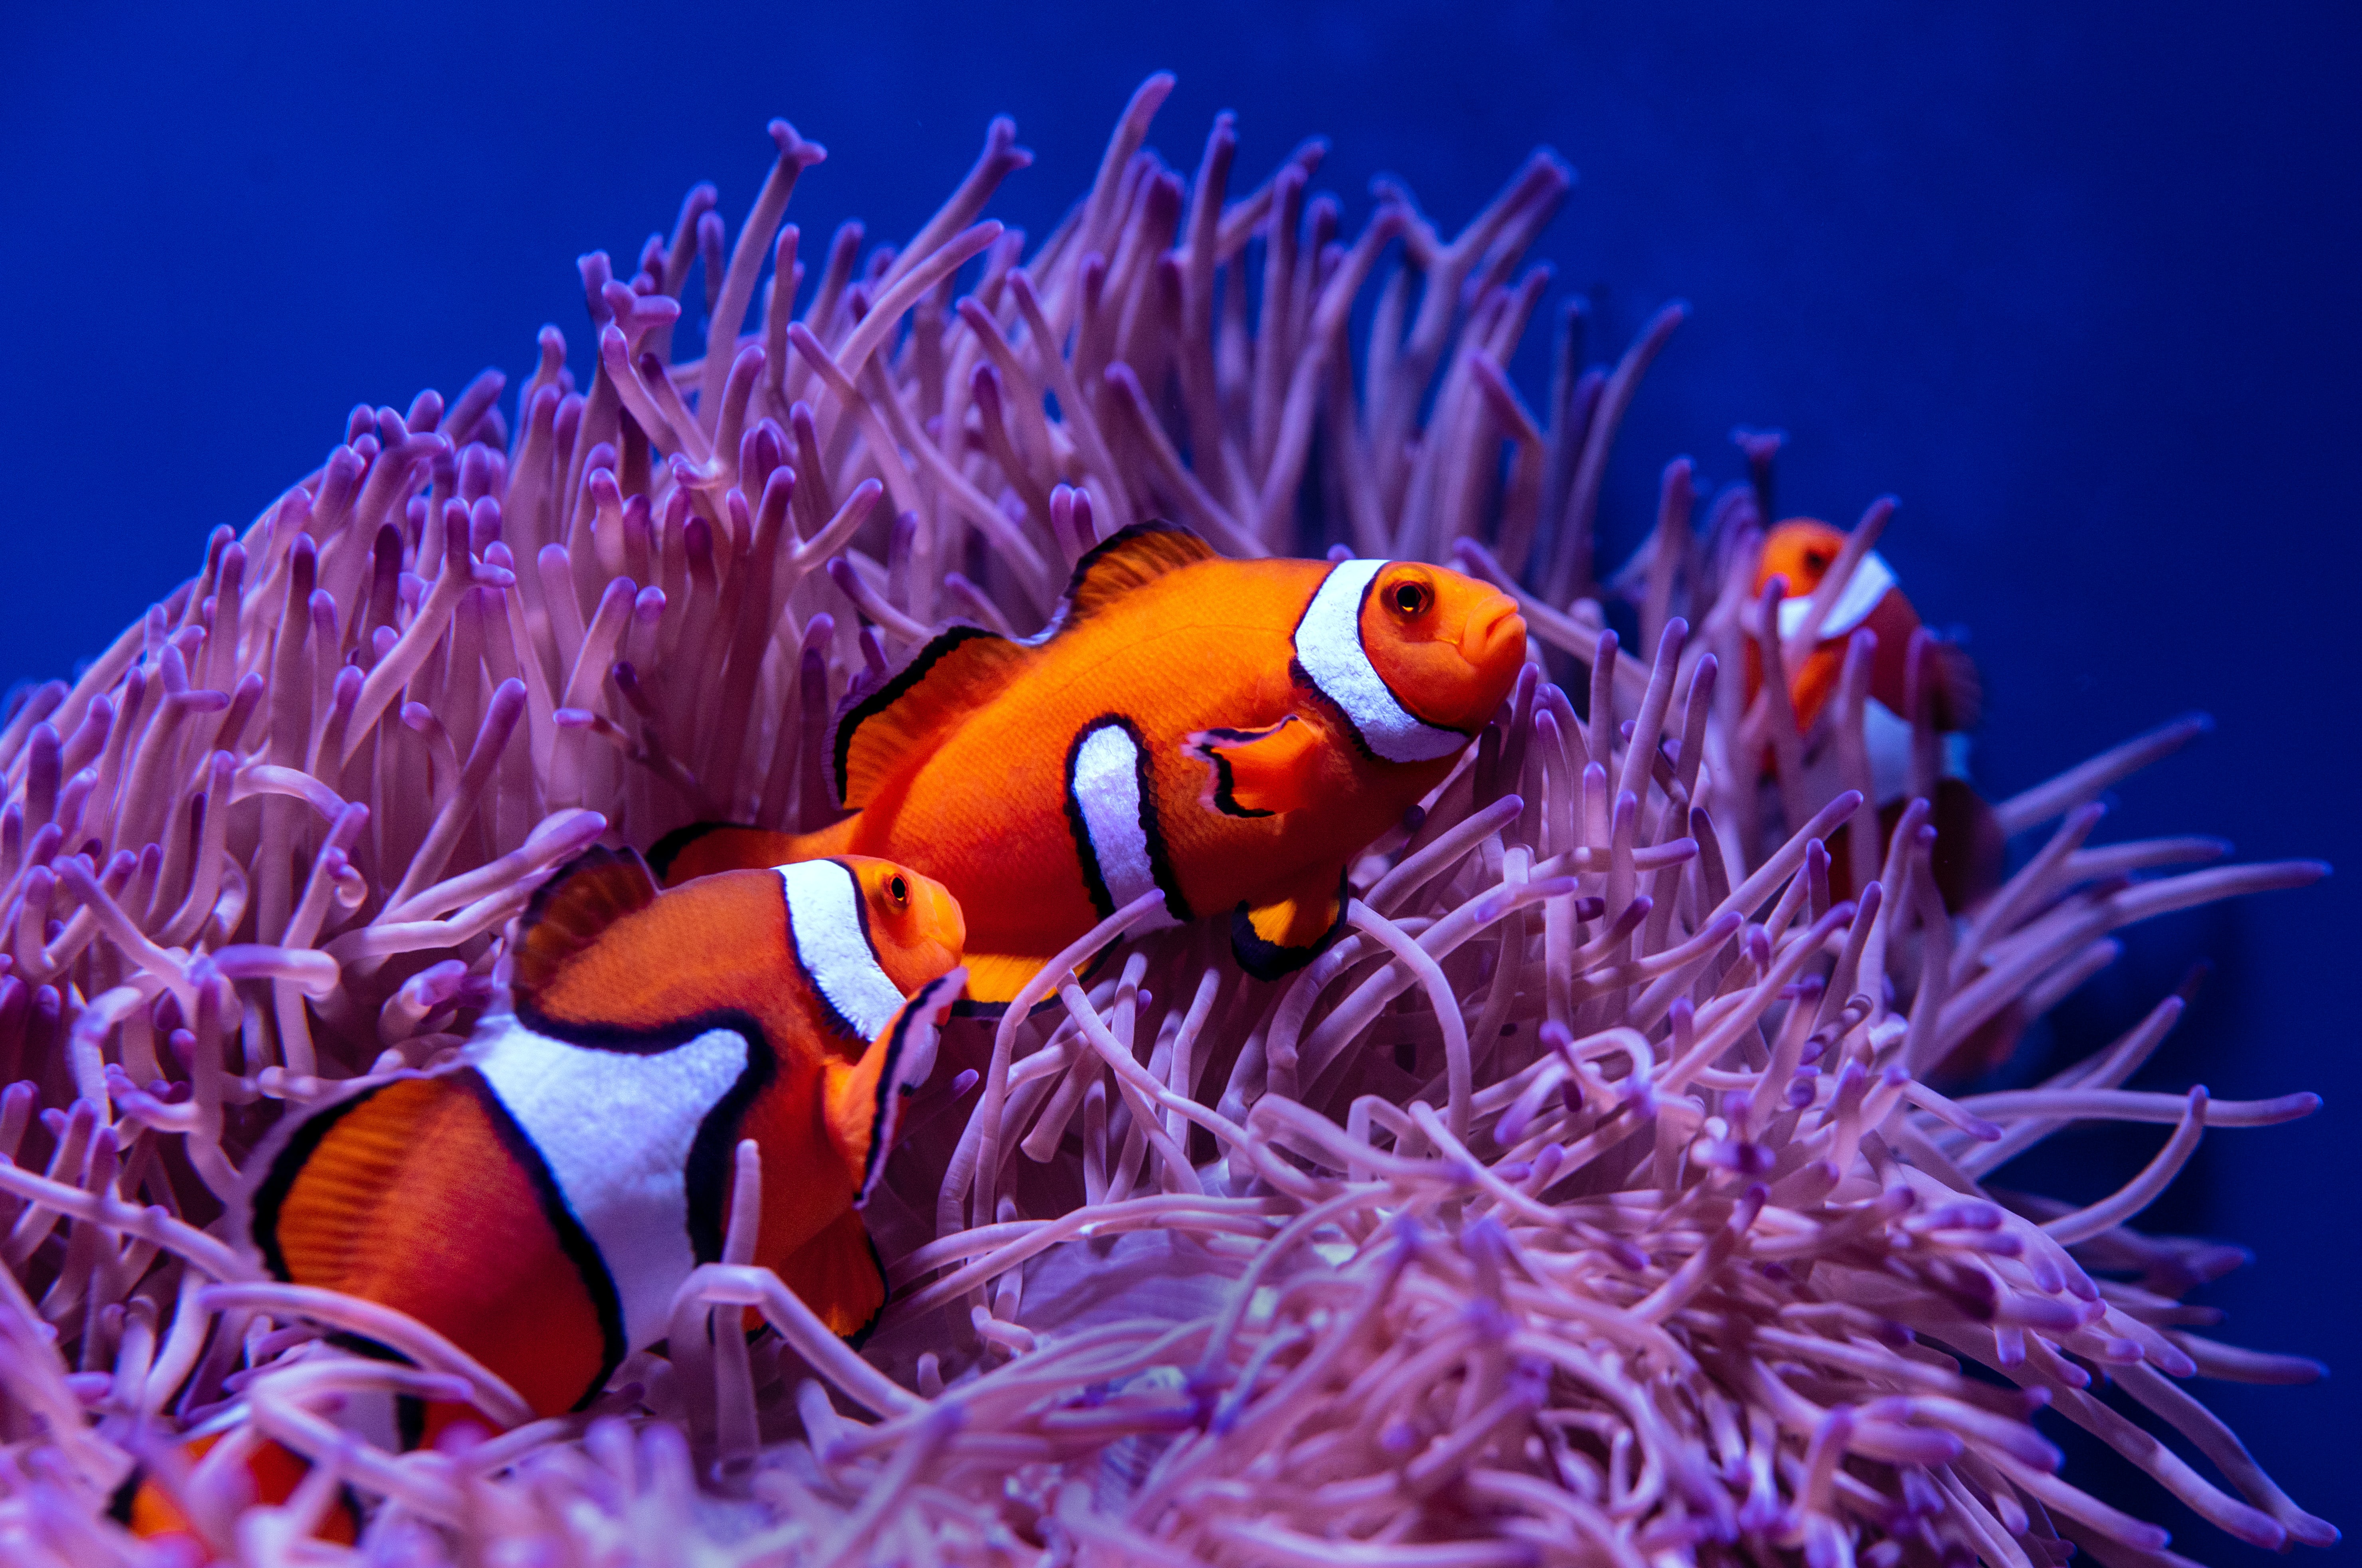 coral, animals, water, clown fish, fish, fish clown, reef